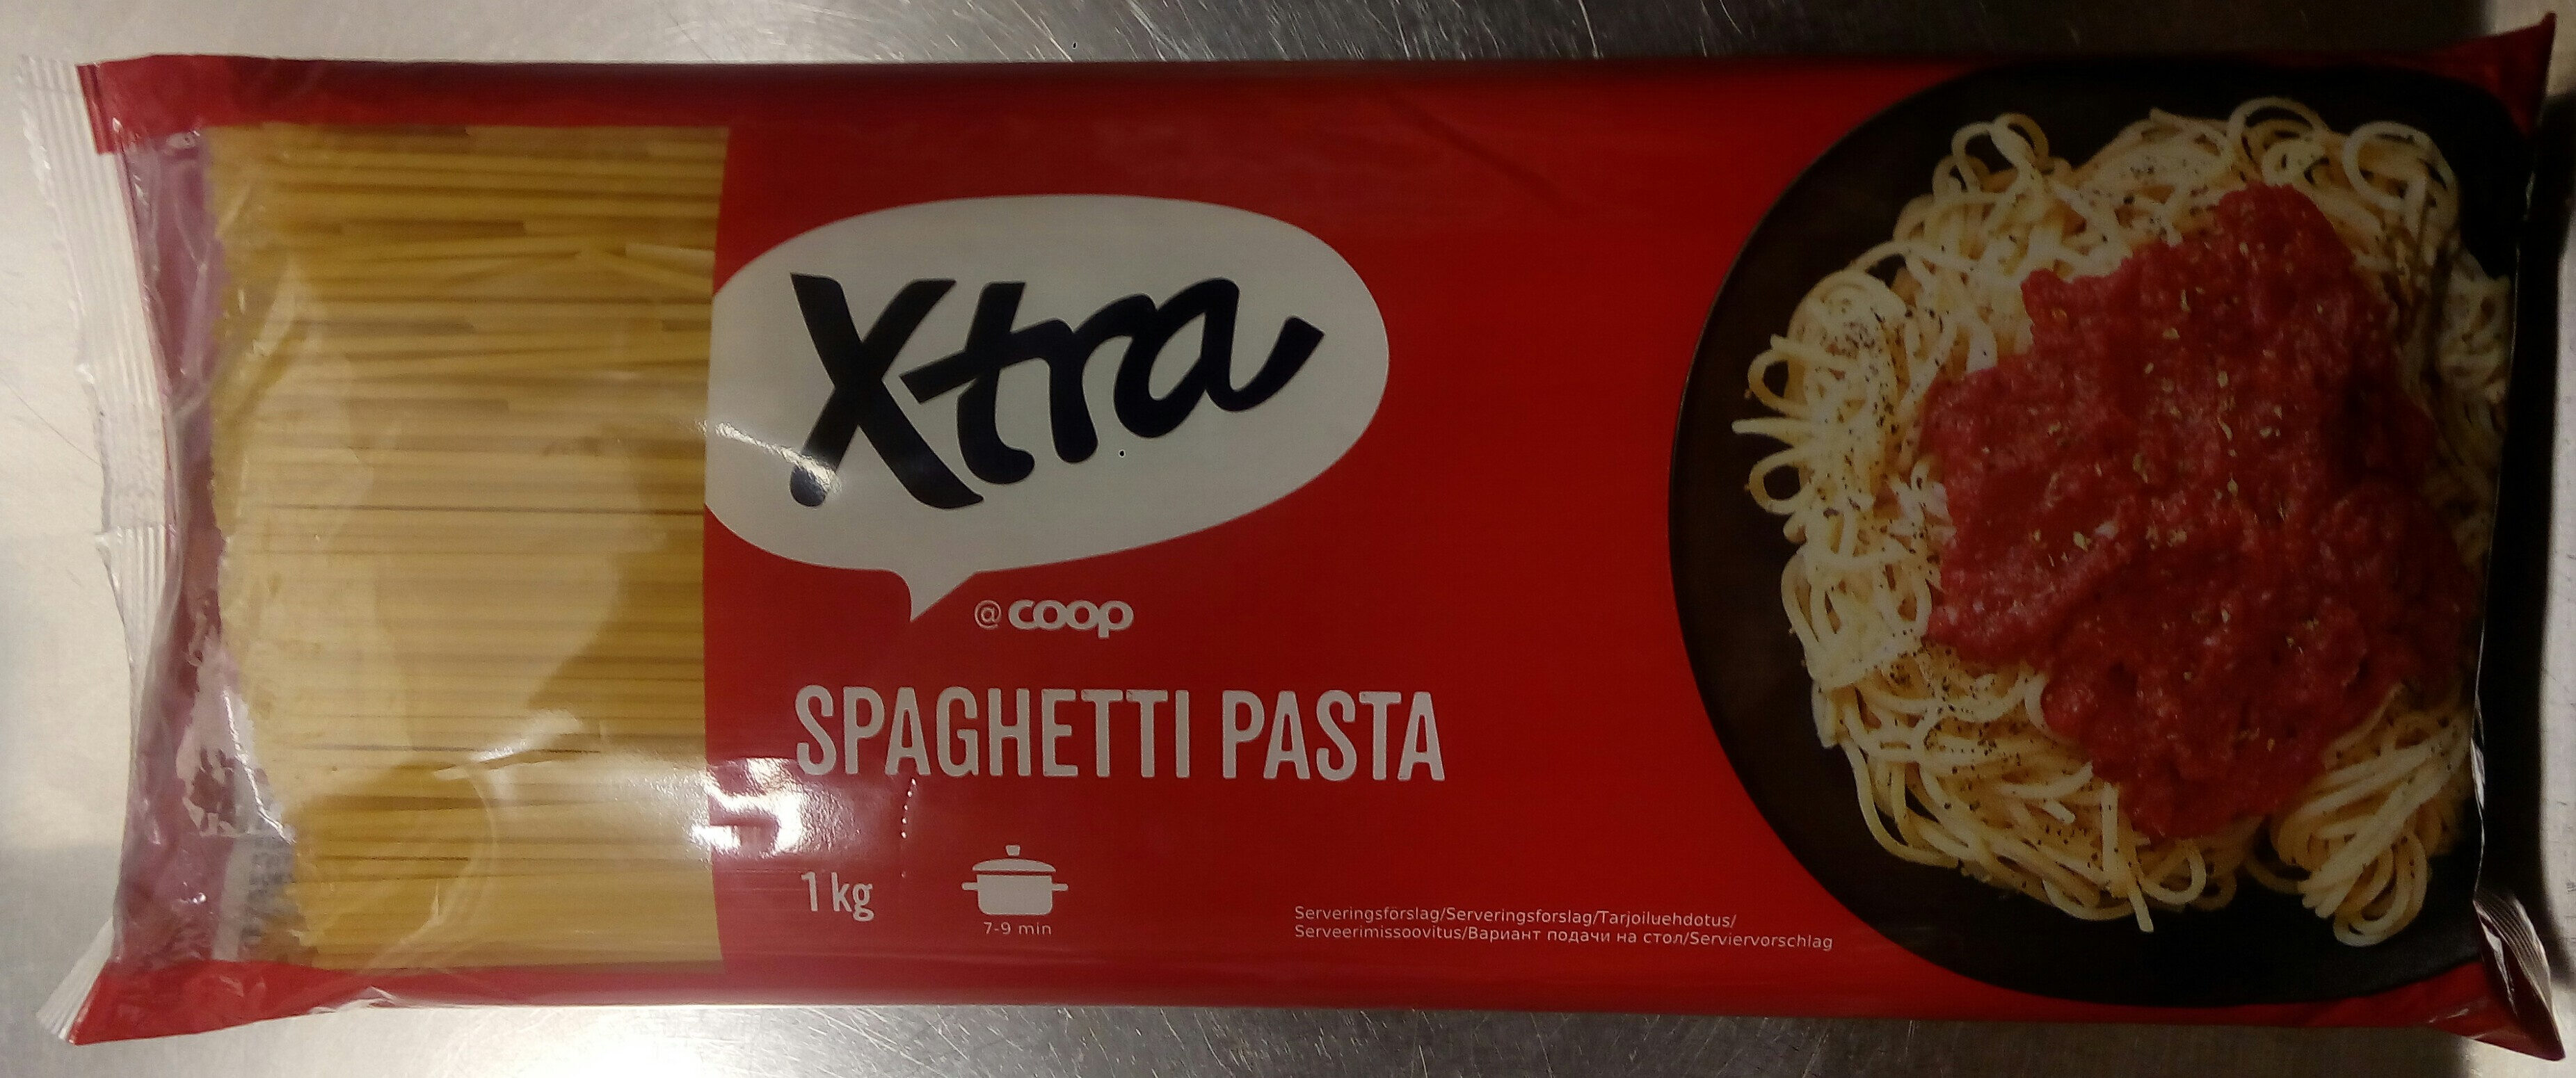 Nudeln Spaghetti - Produkt - sv